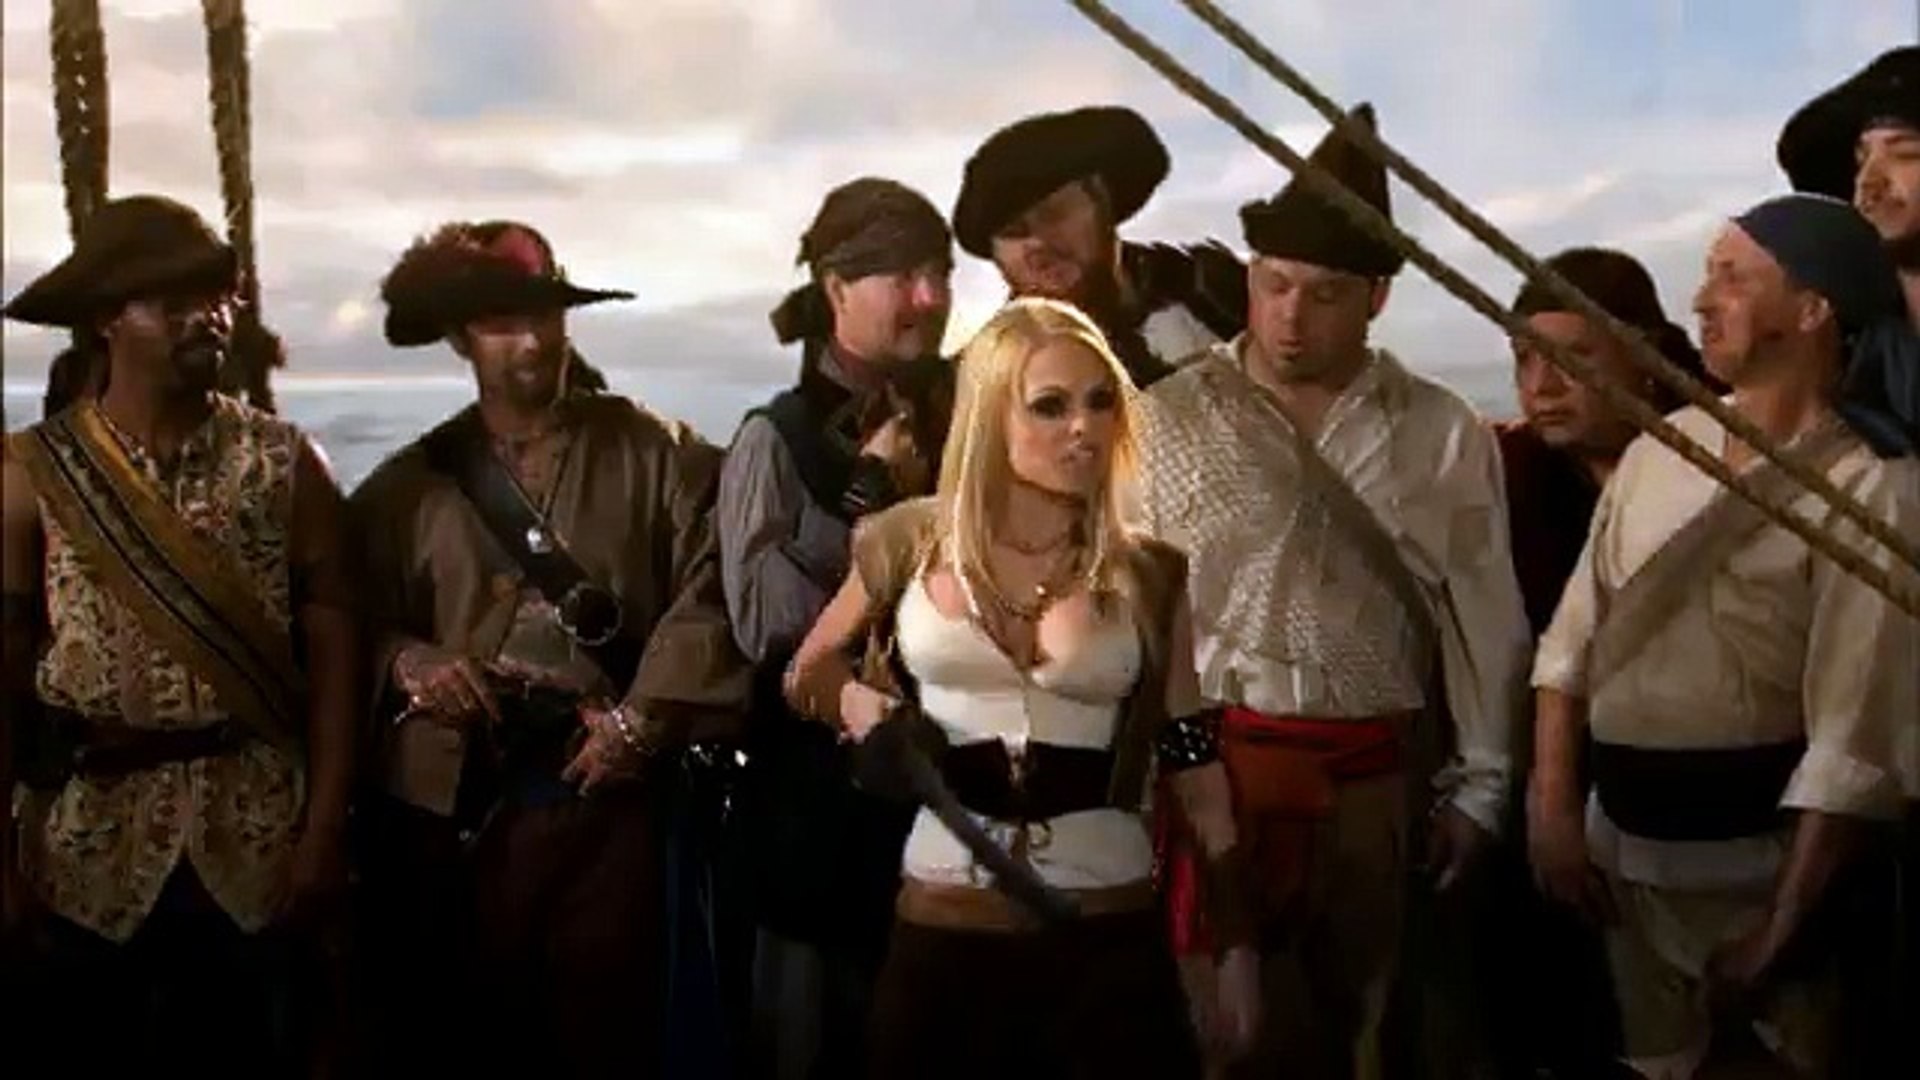 Pirates 2 Online Free